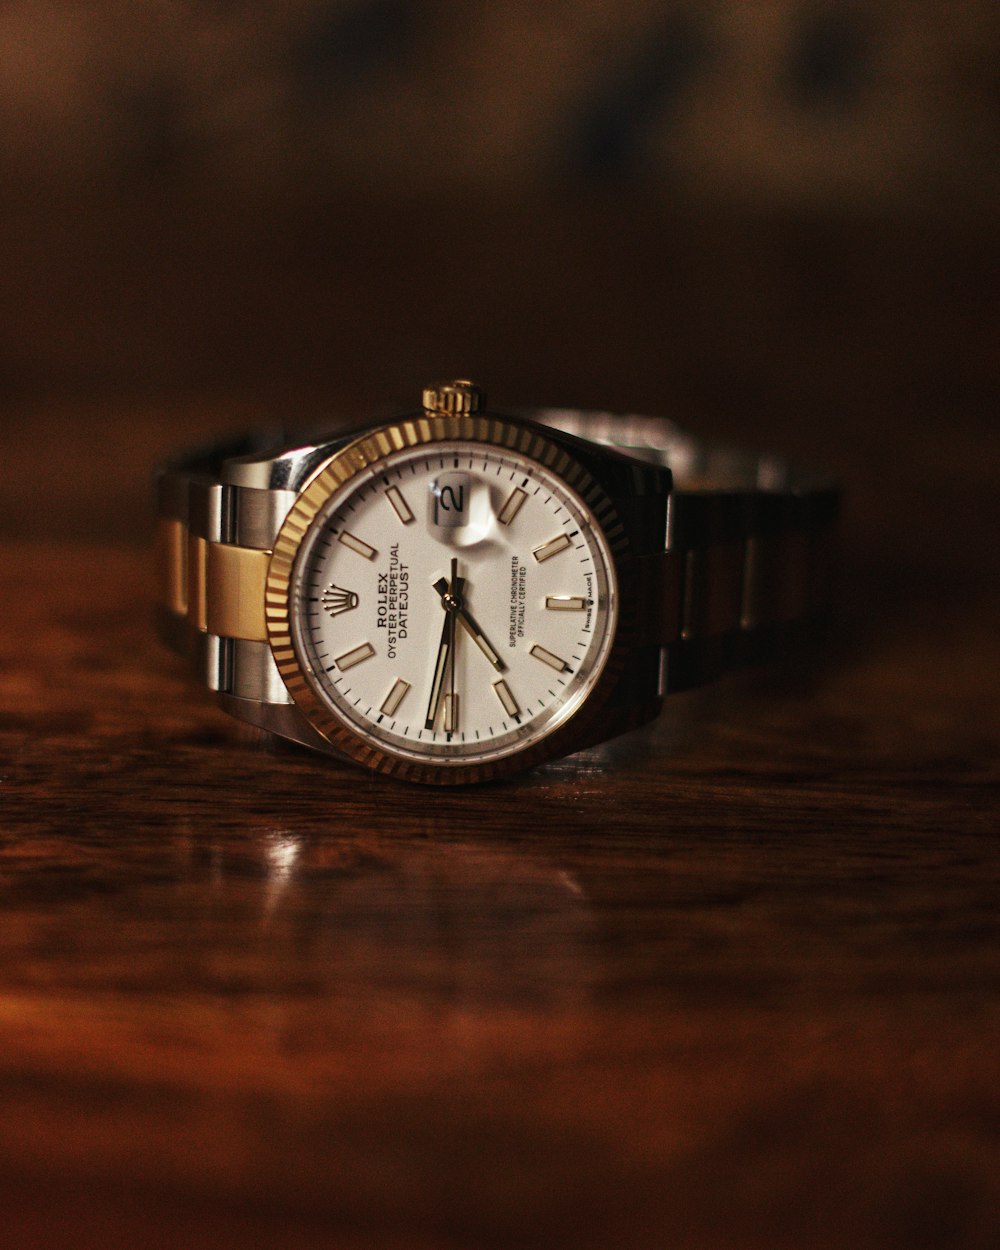 silver link bracelet round analog watch